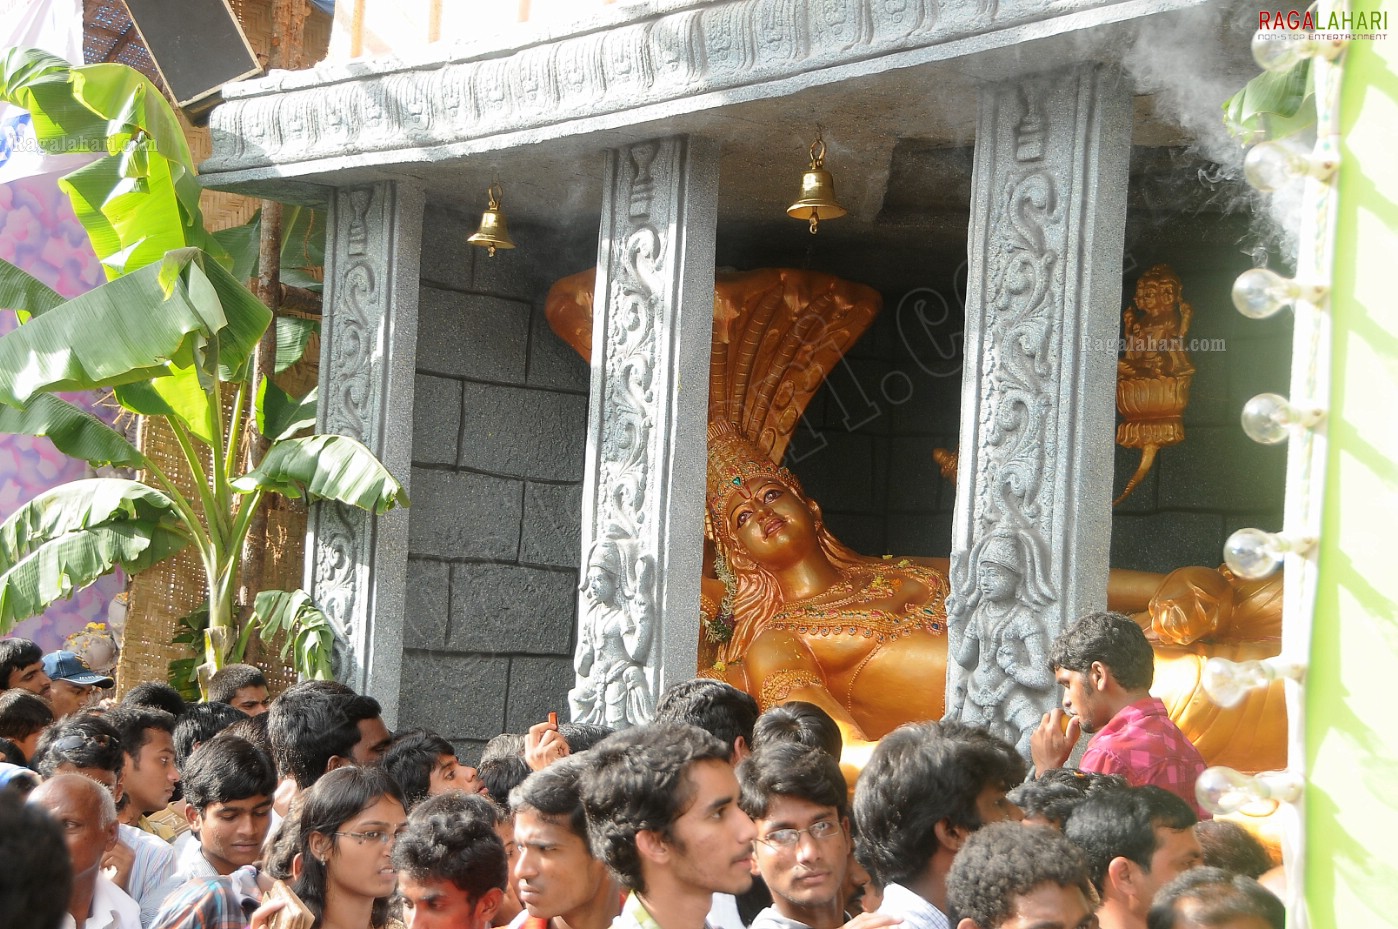 Khairatabad Ganesh Idols 2011 (Posters)